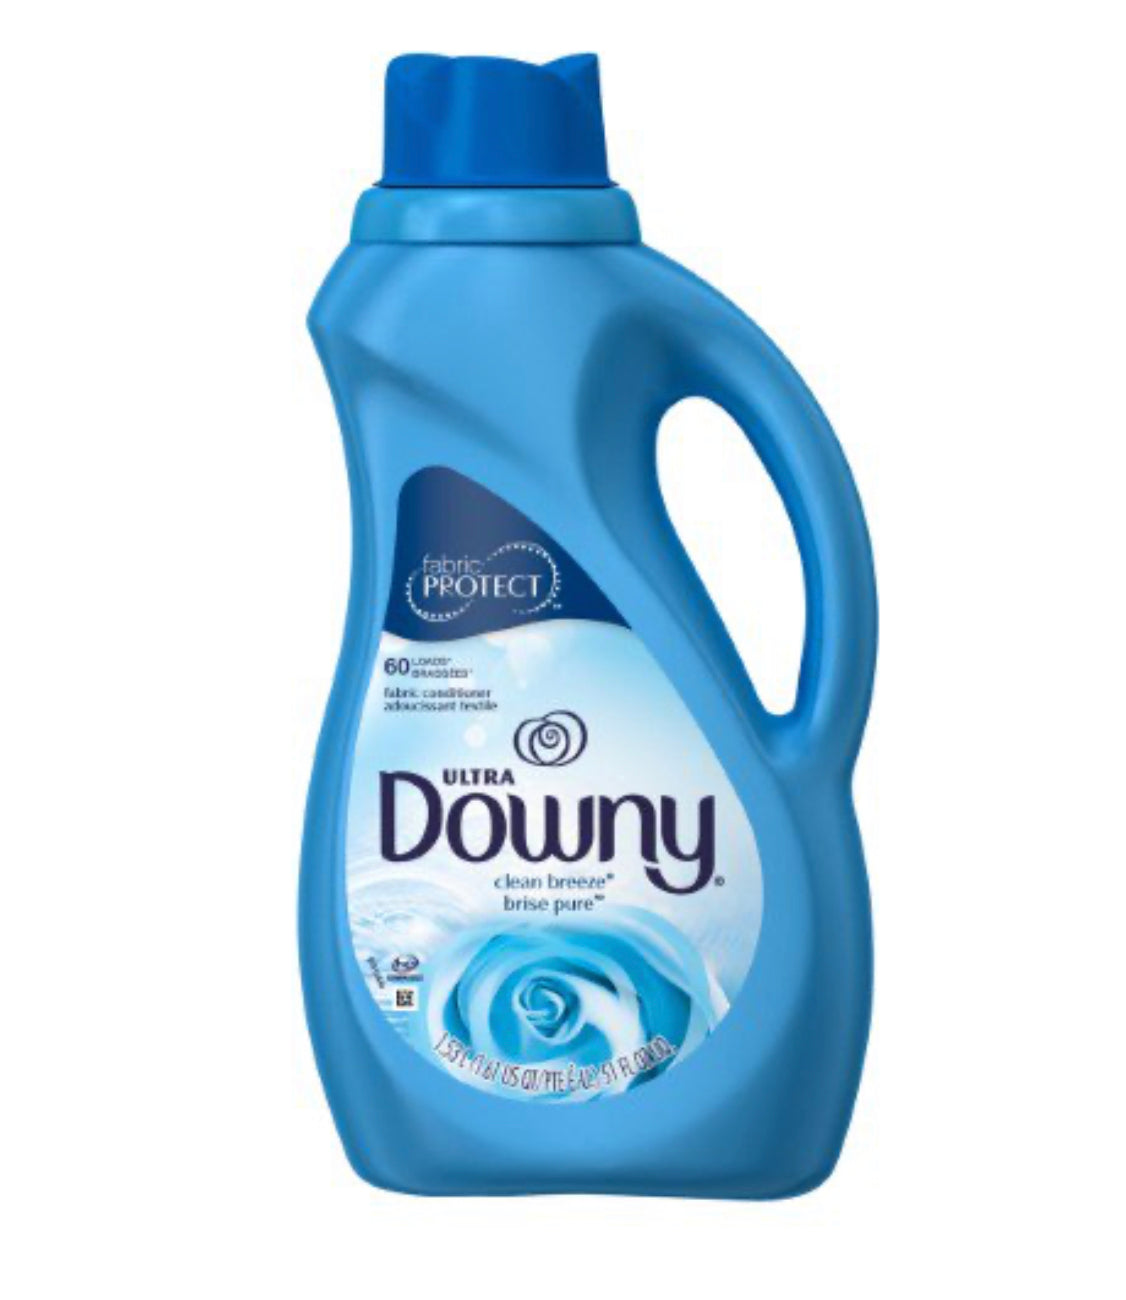 Downy Ultra Liquid Fabric Softener Clean Breeze 51oz